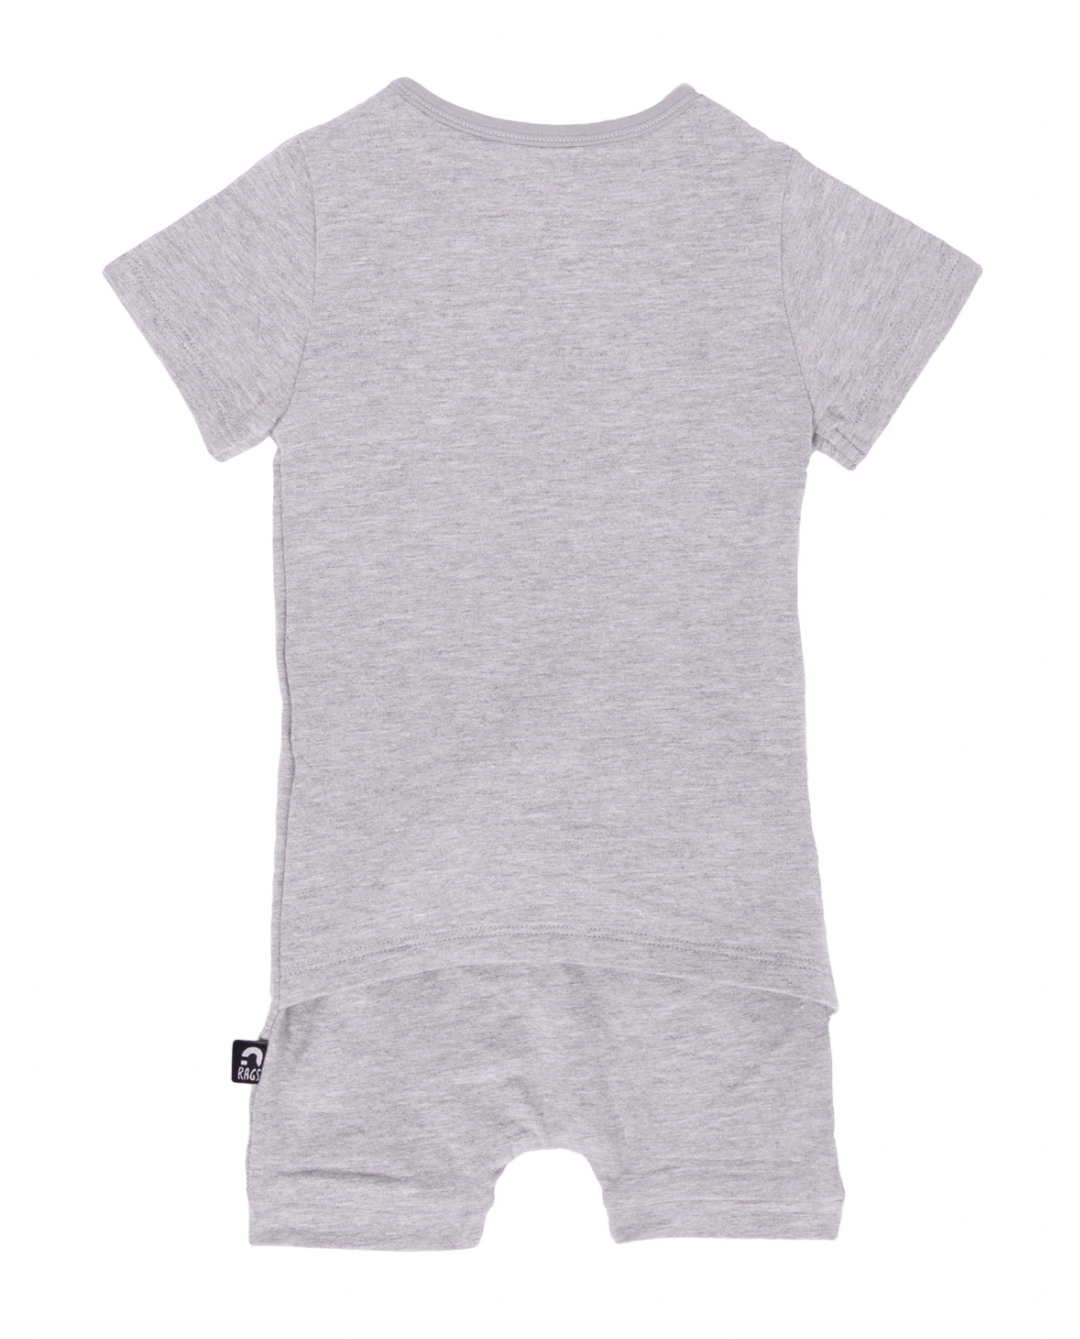 Rags - Essentials Infant Peekabooty Short Sleeve Shorts Romper in Heather Grey